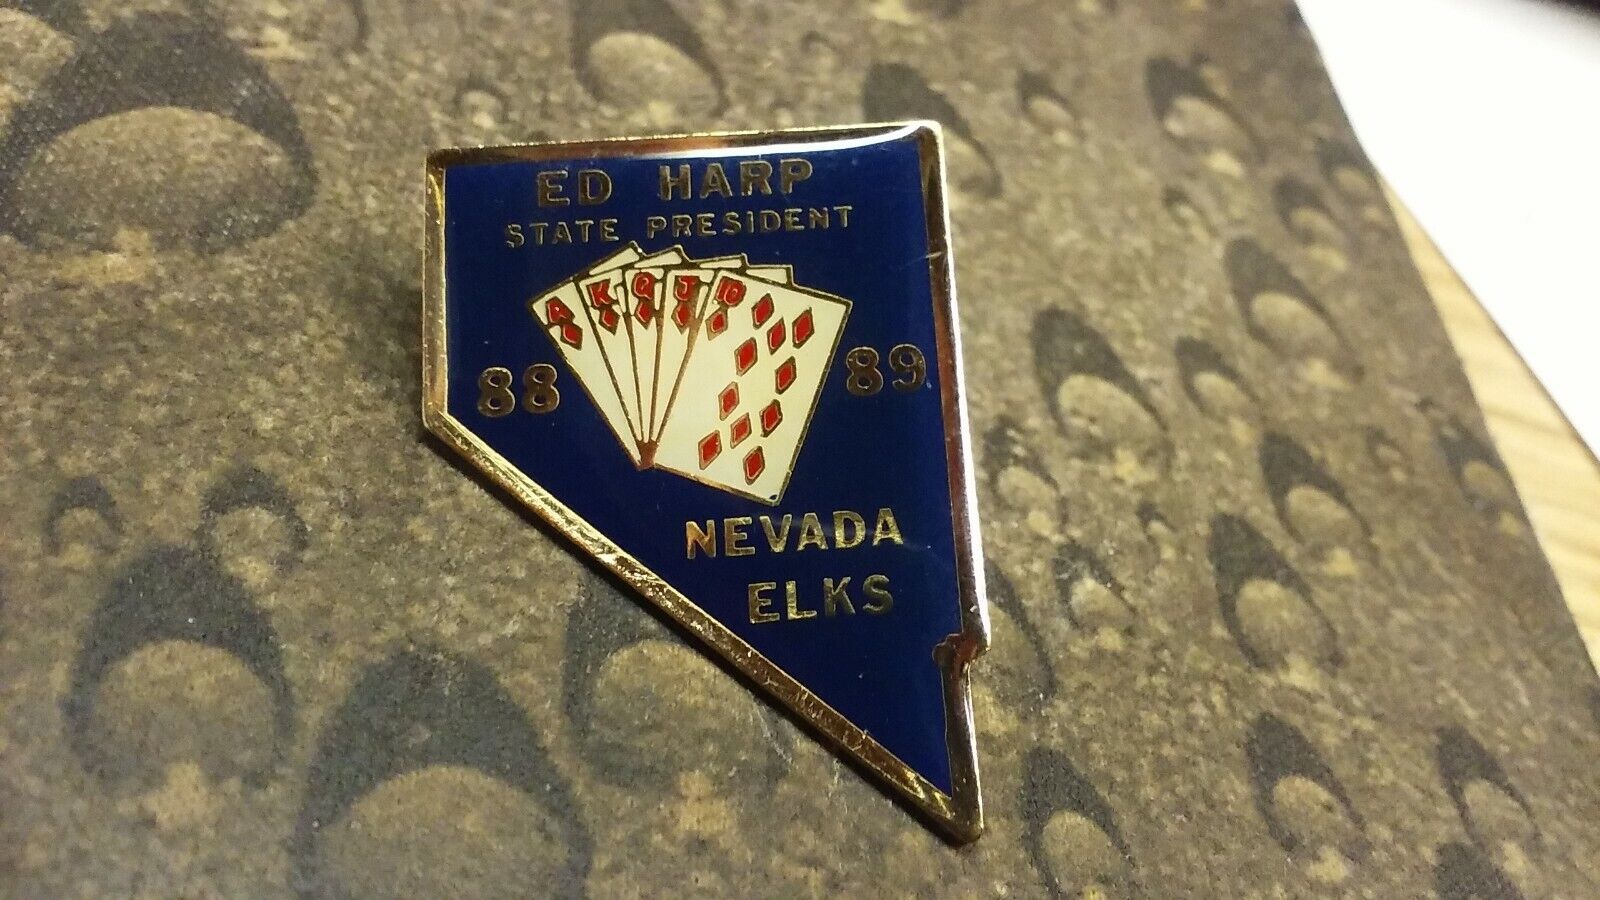 Ed Harp Nevada State President BPOE Elks Lodge pin badge 1988 1989